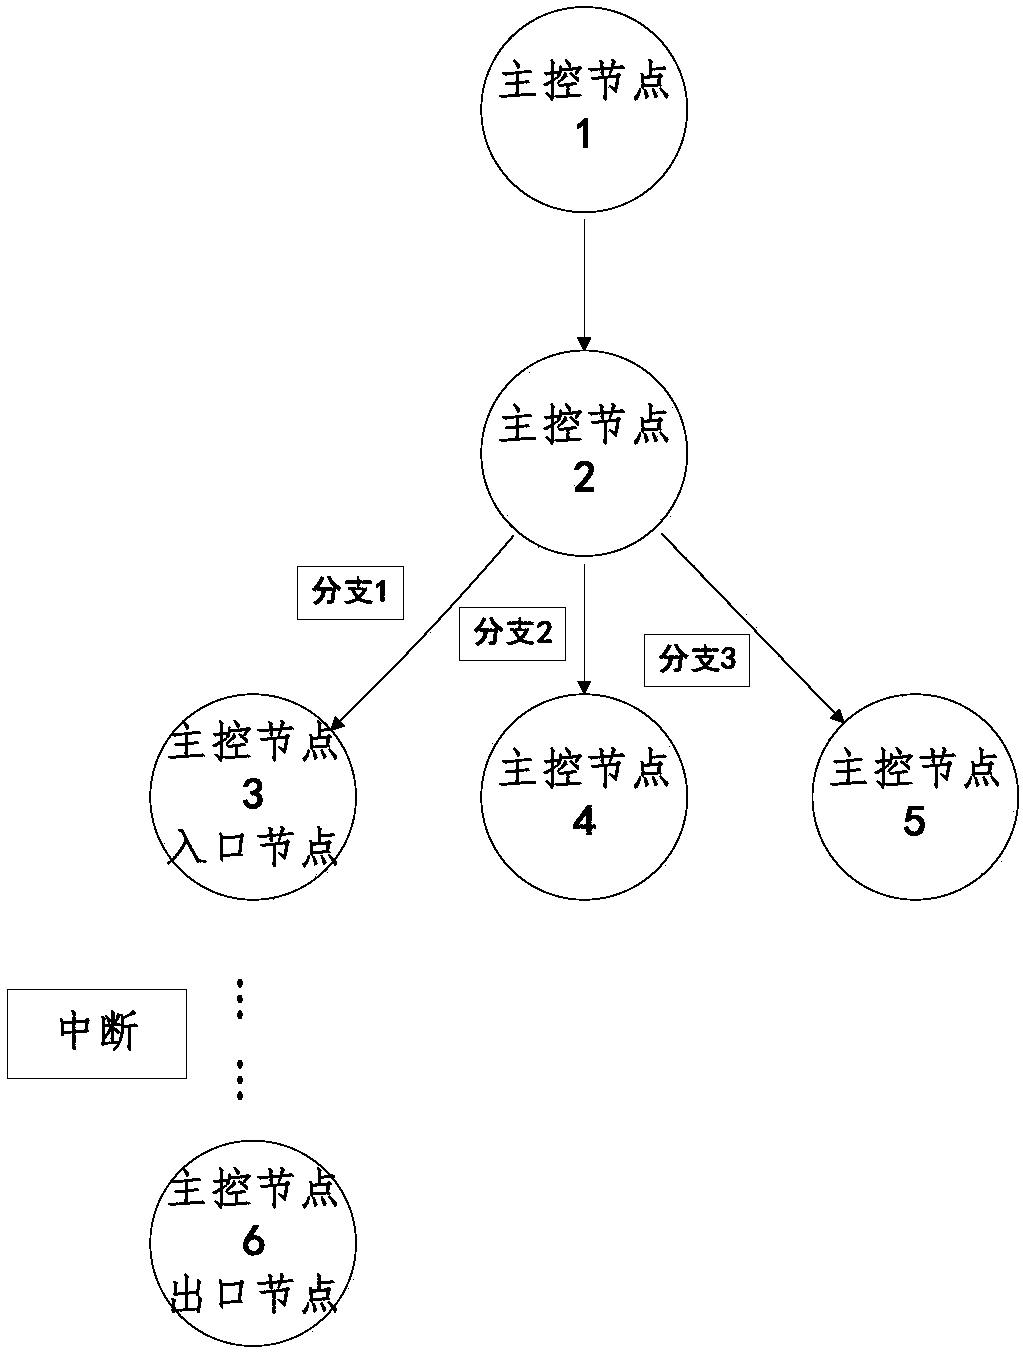 Interruption control flow diagram-based interruption verification method